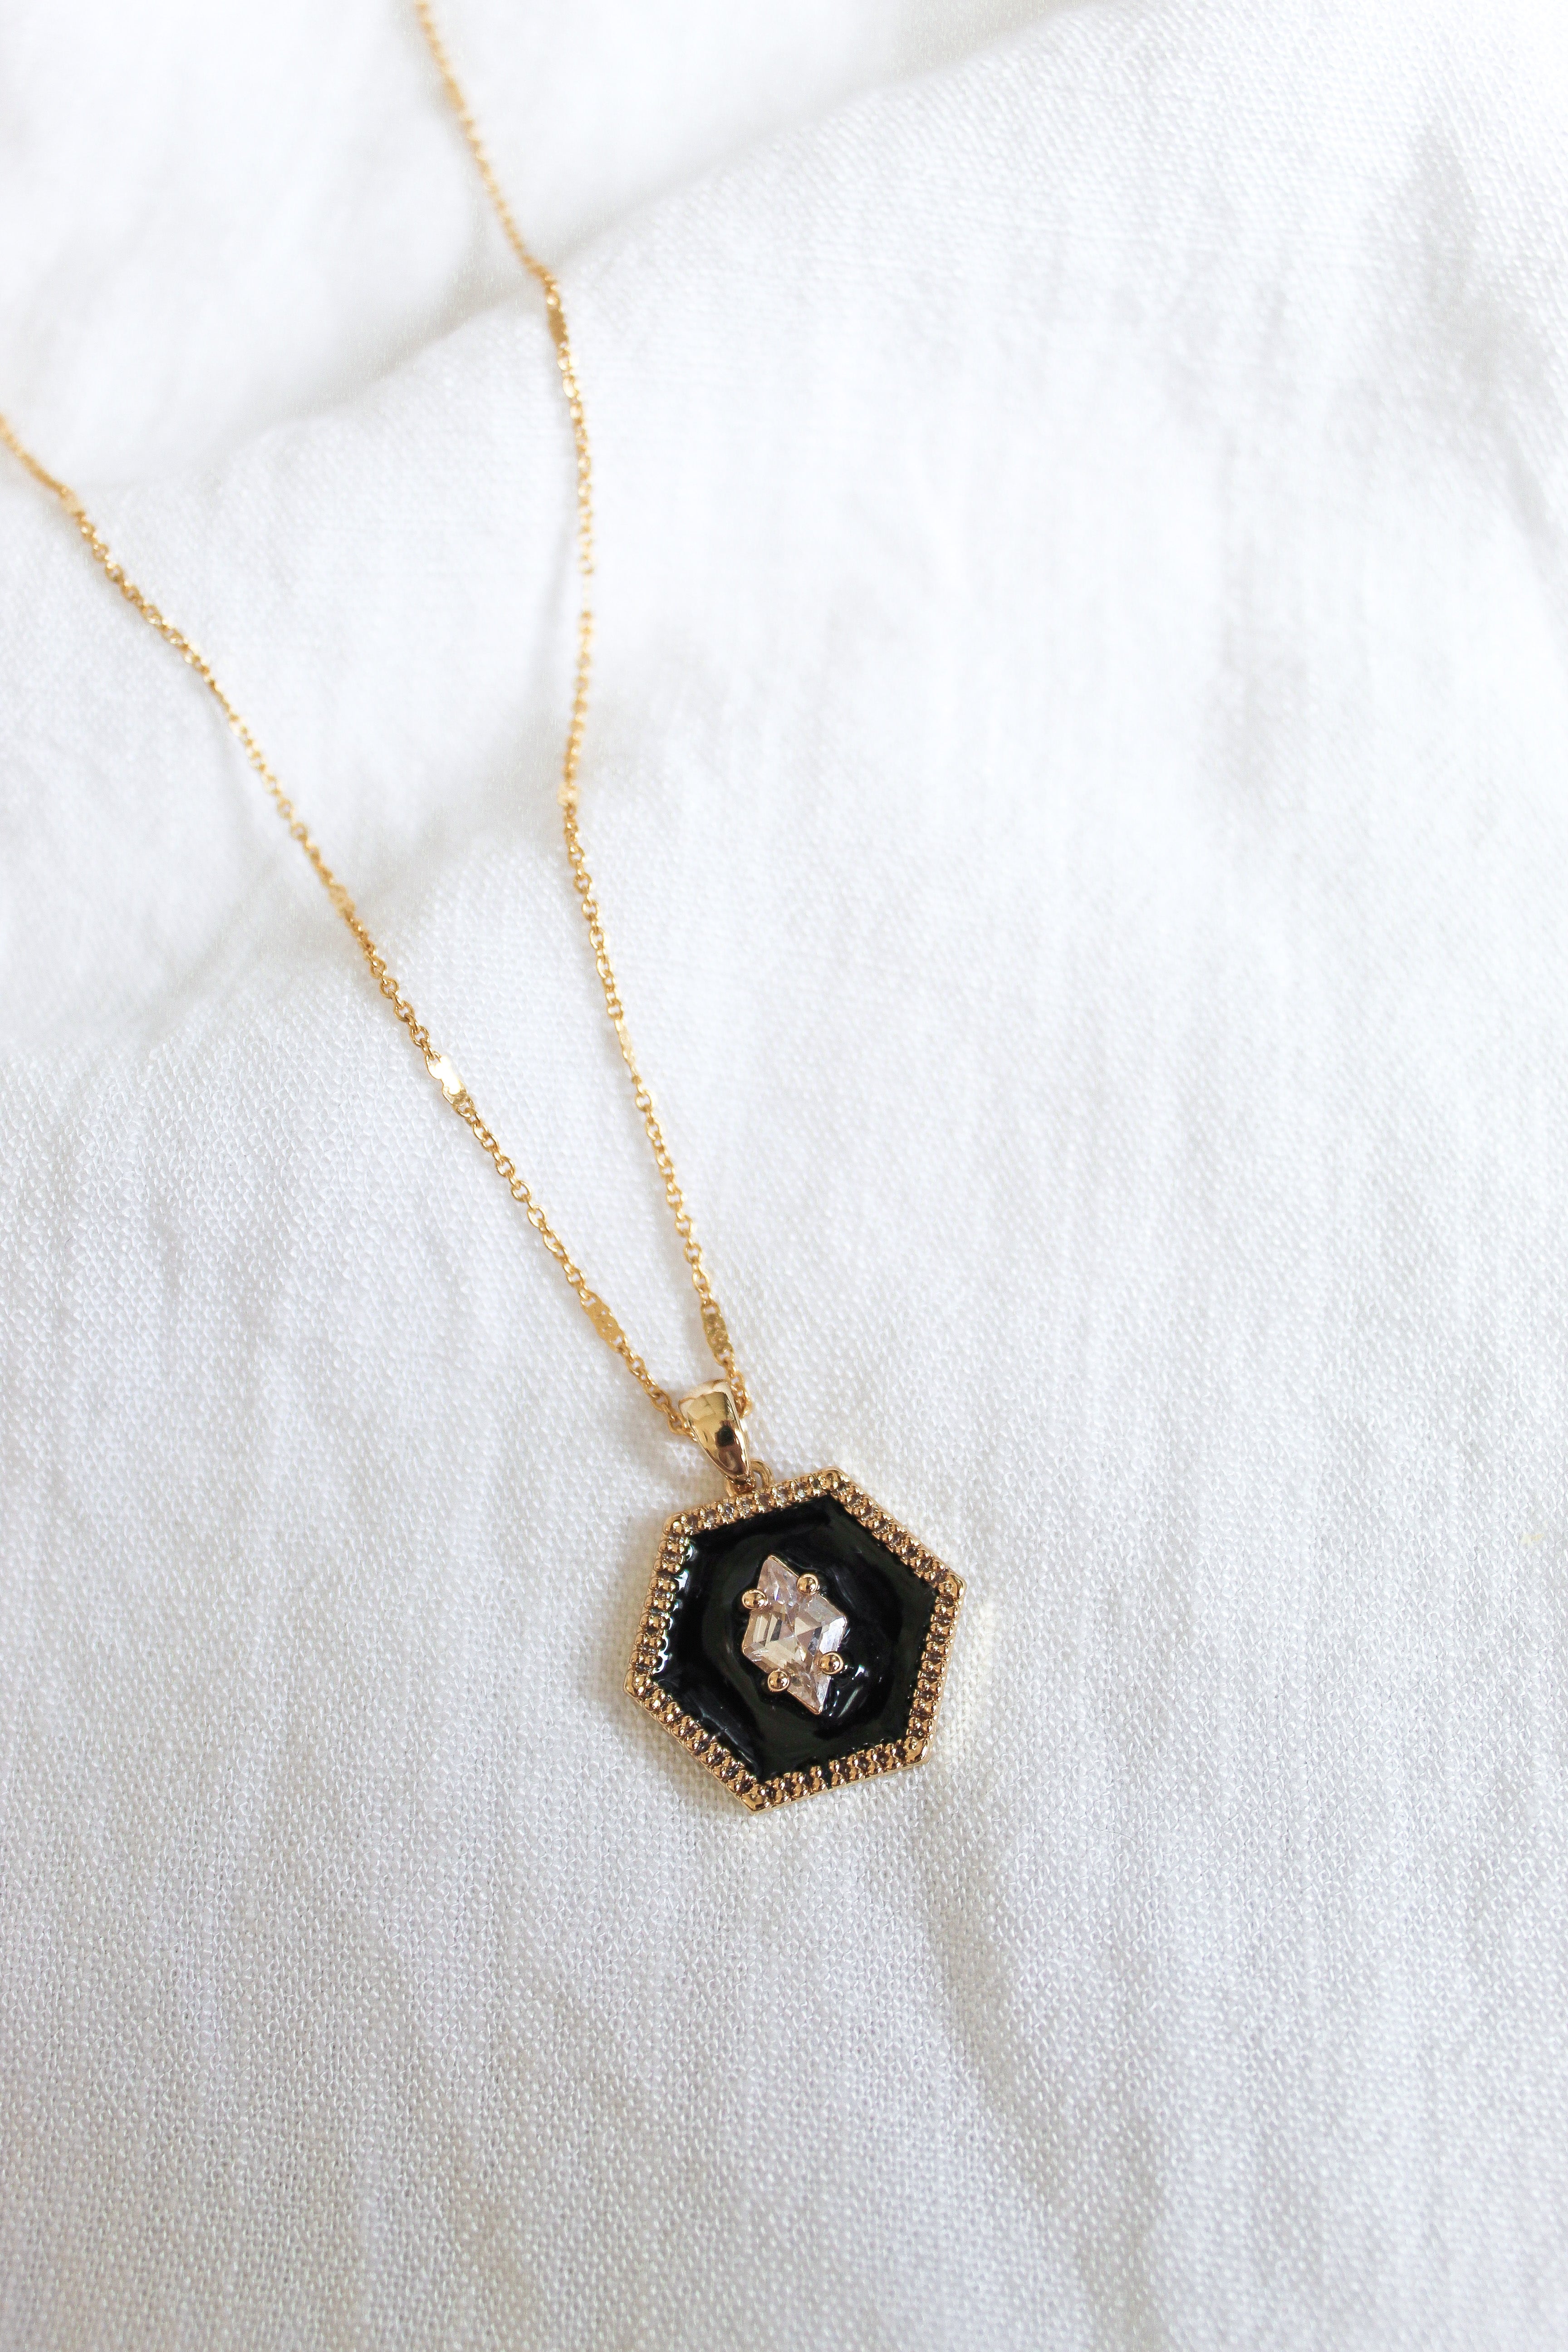 Kinsey Designs Nova Black Enamel Hexagon Pendant Necklace